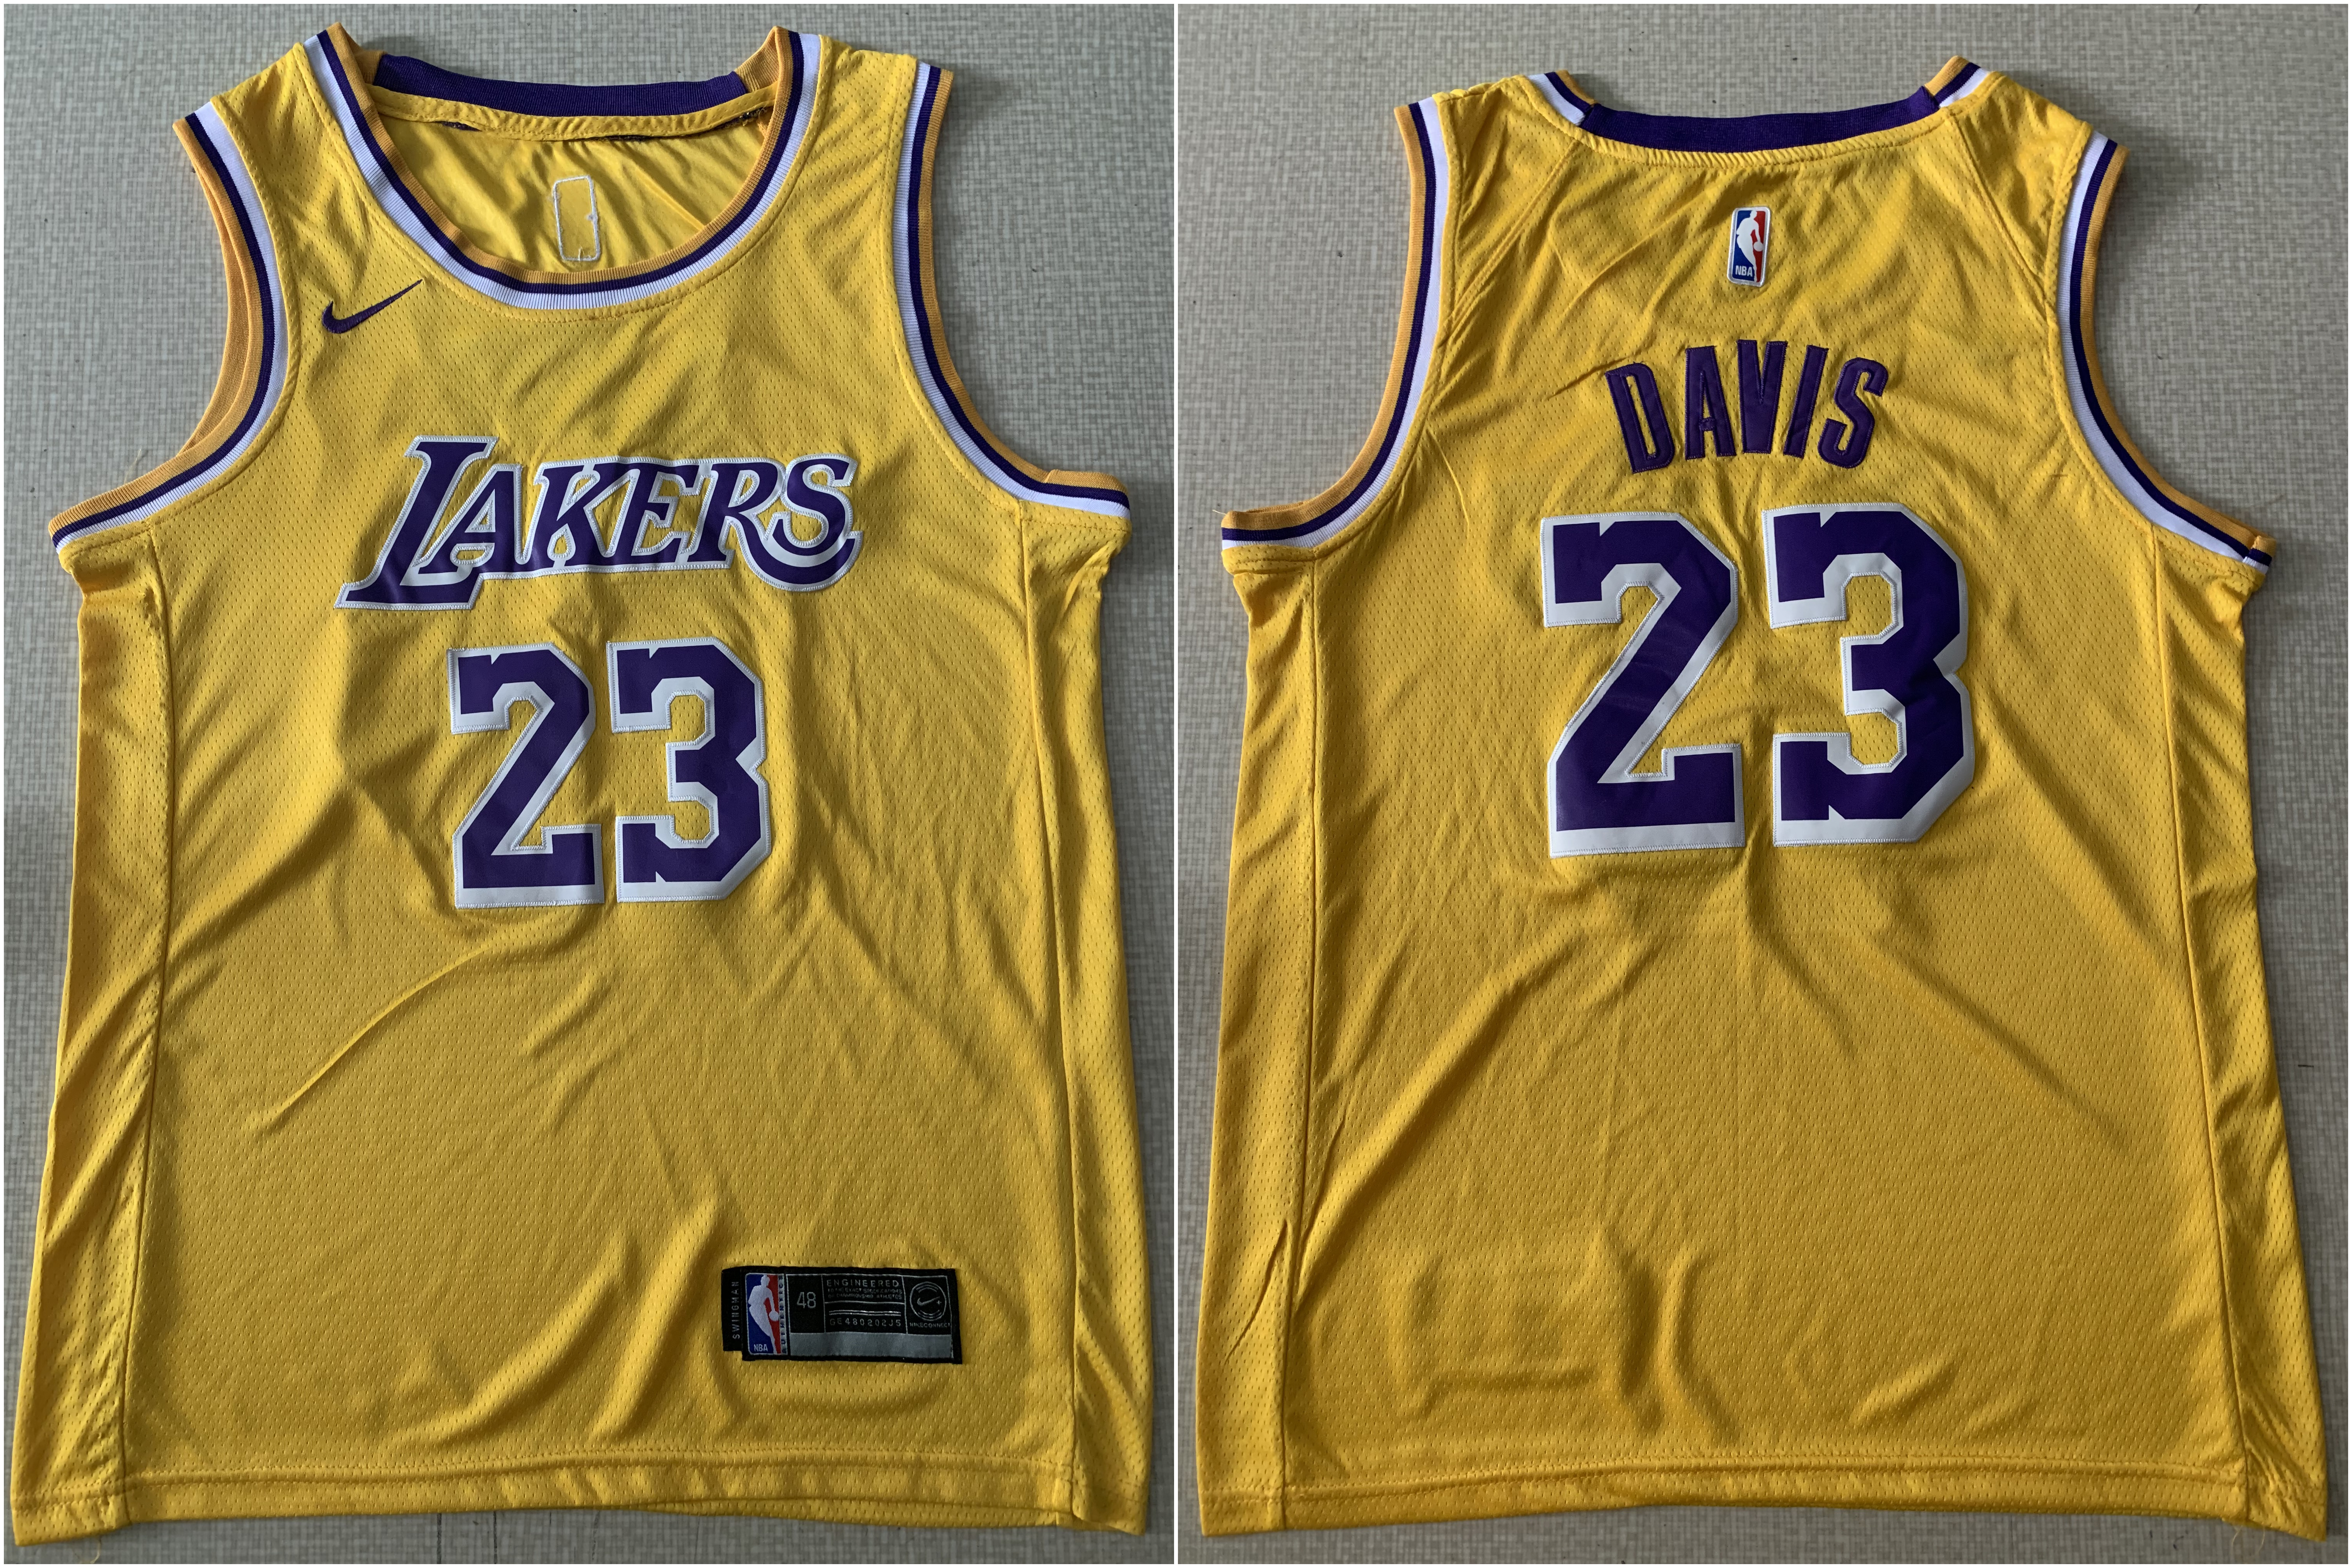 Lakers 23 Anthony Davis Yellow Nike Swingman Jersey